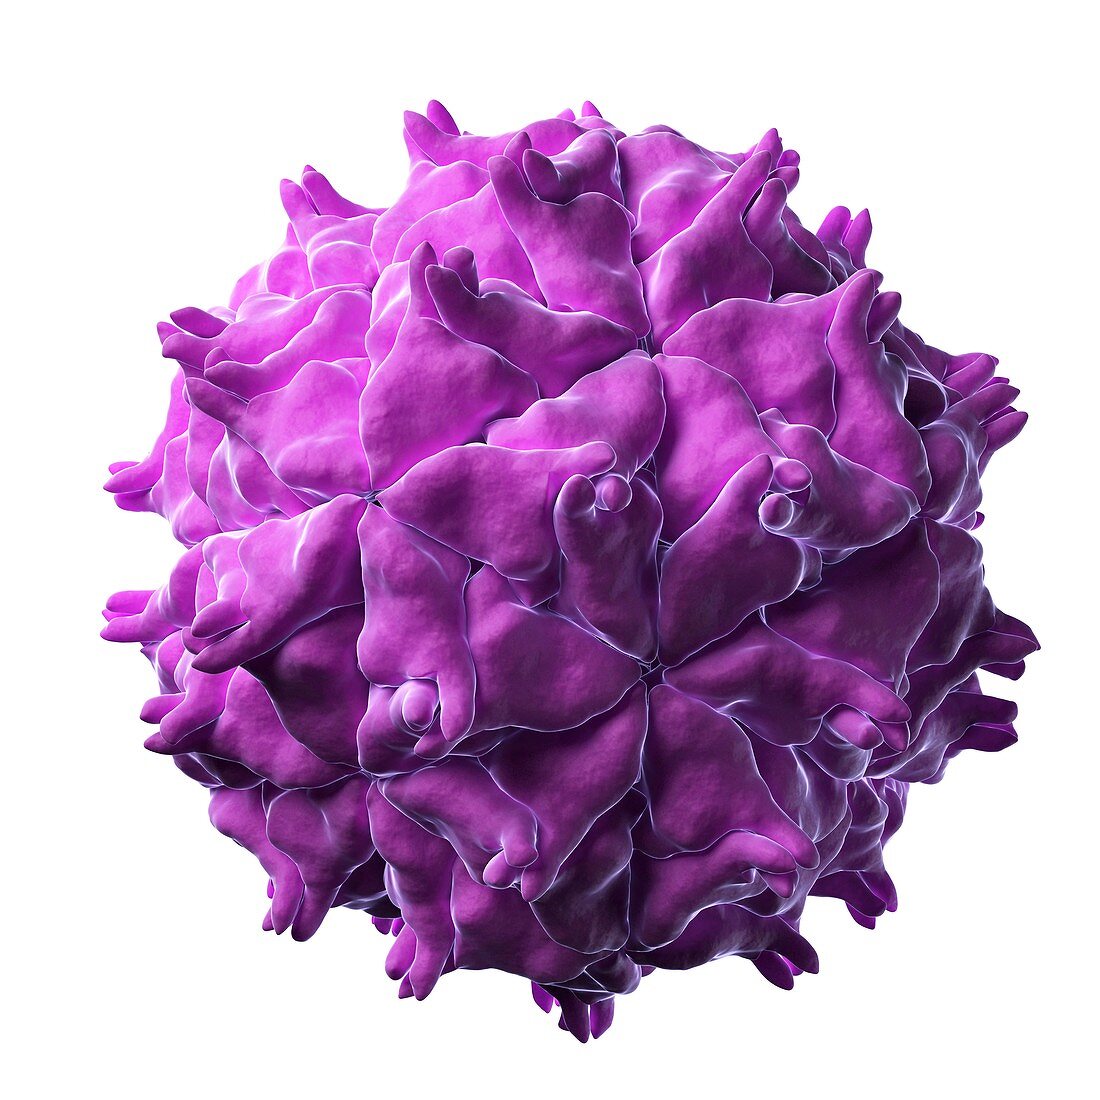 Nodamura virus particle